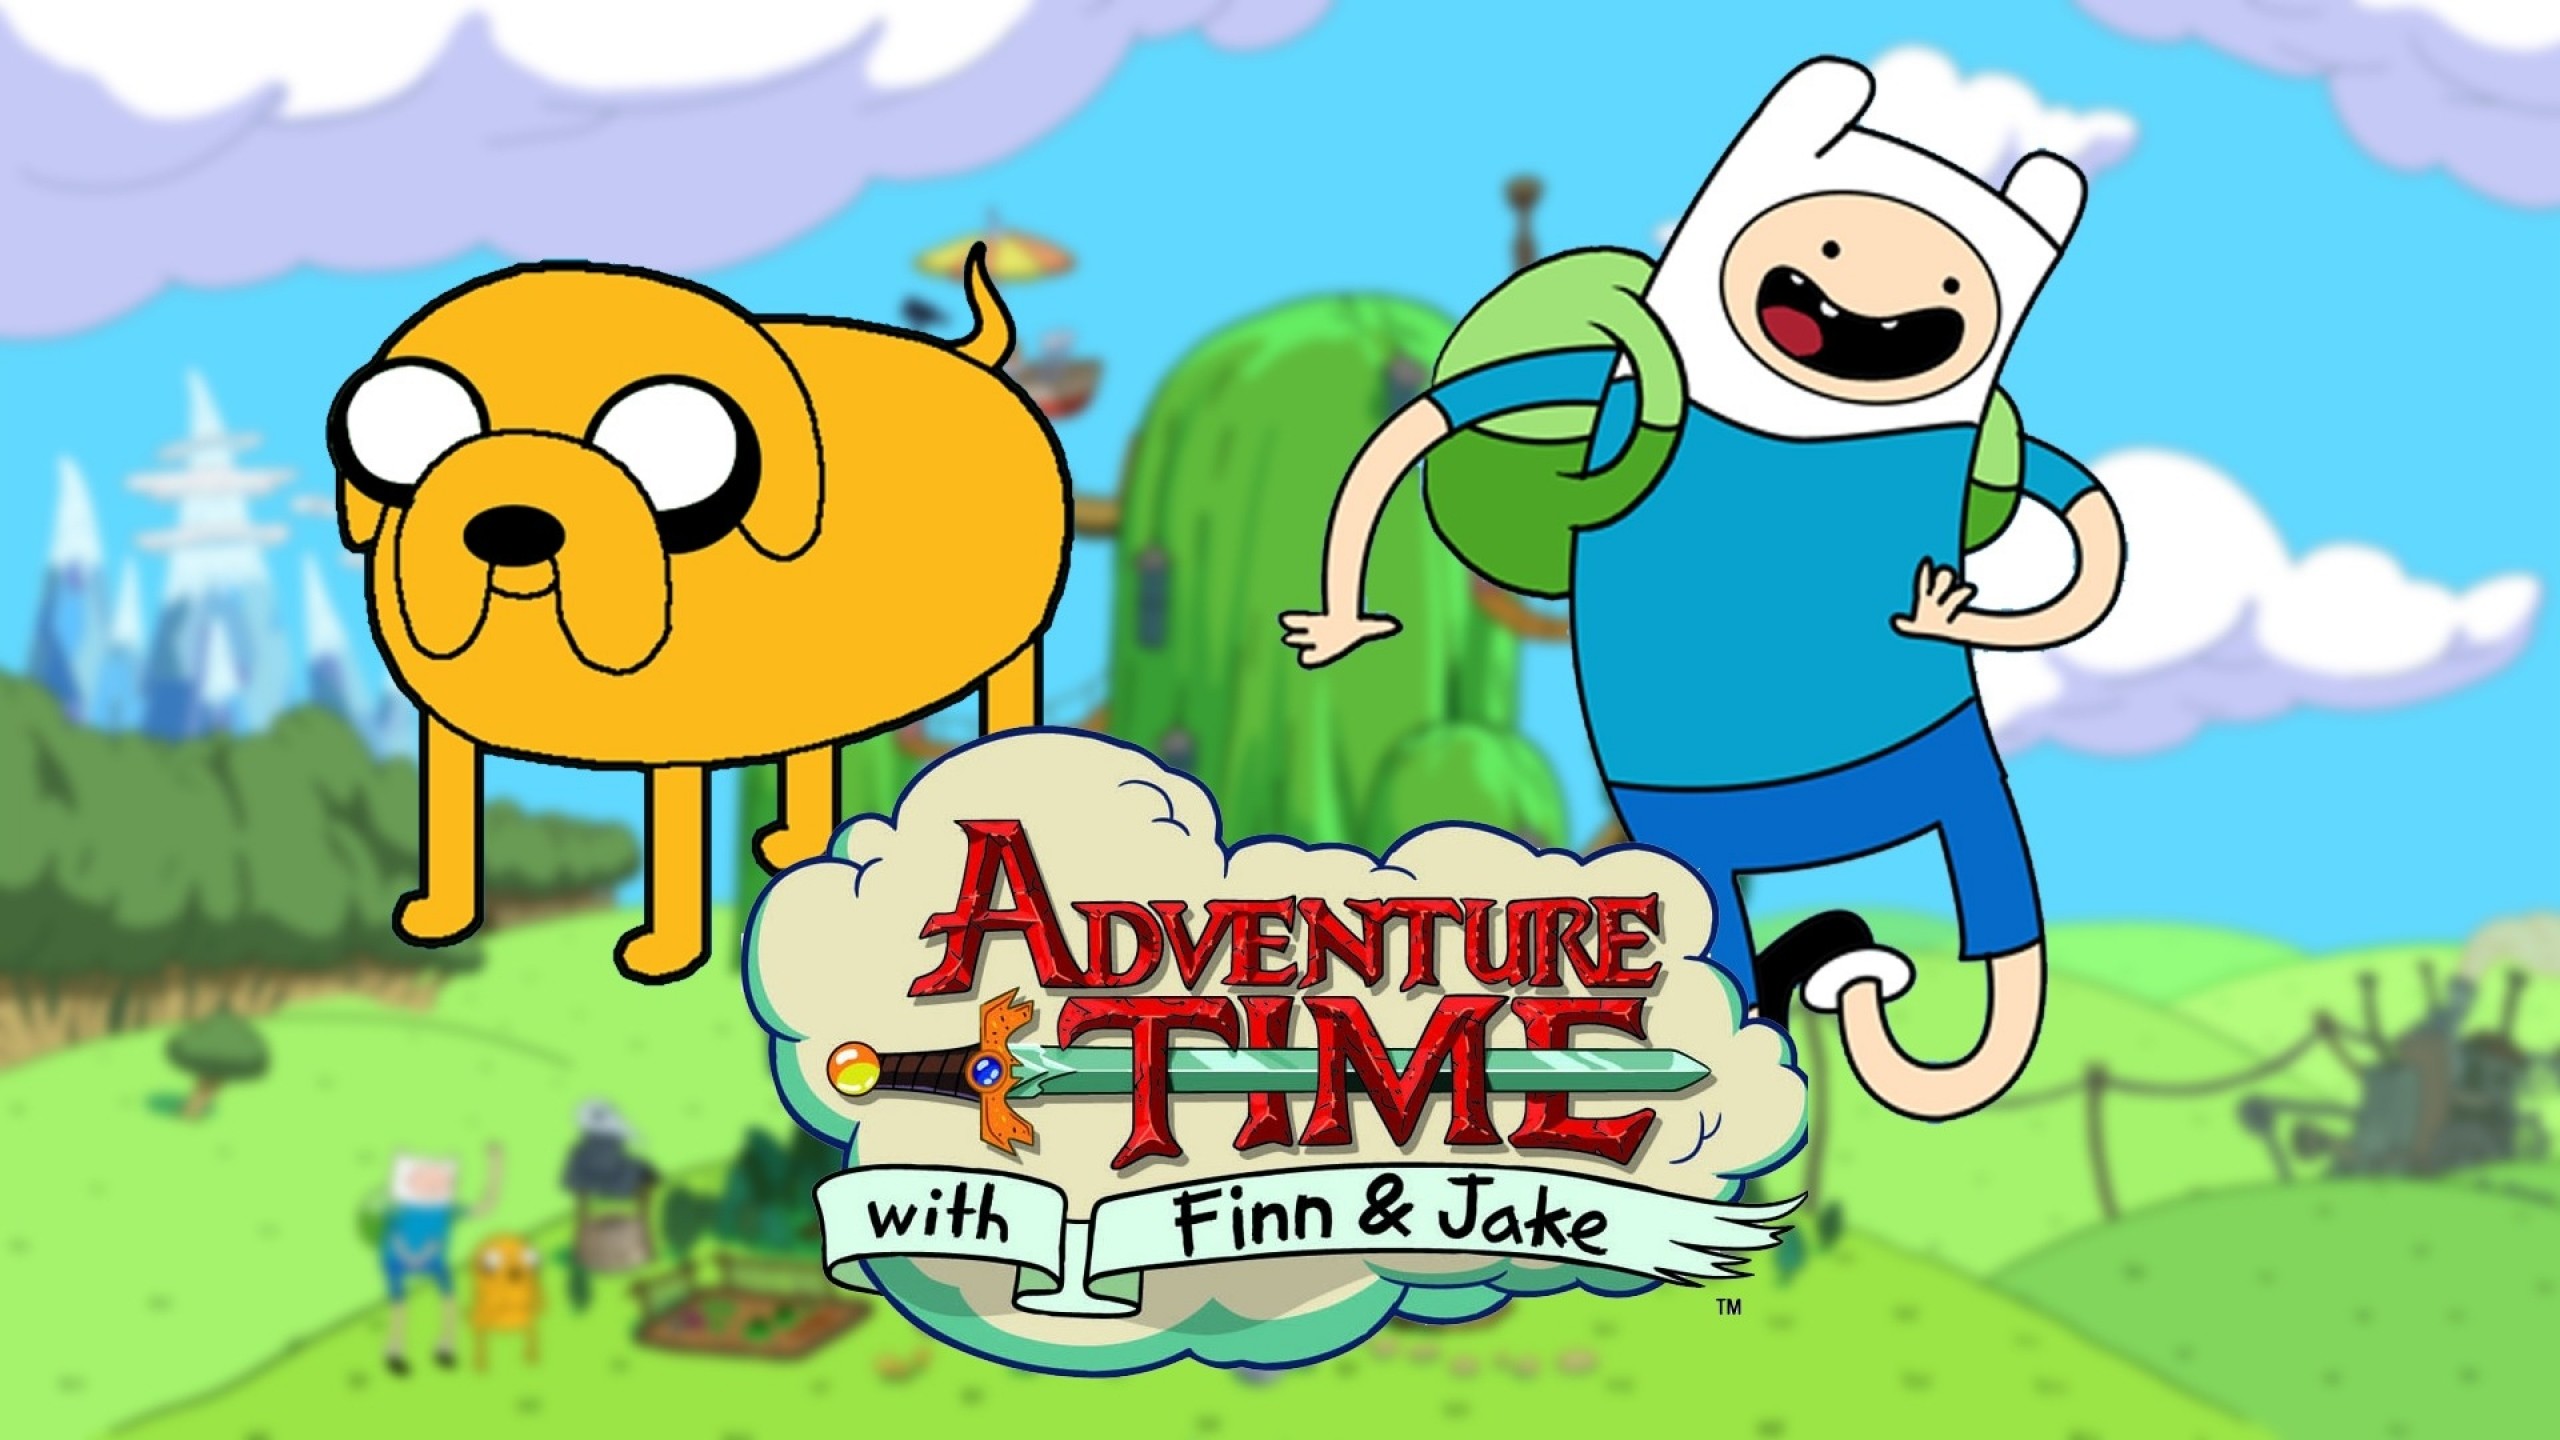 Приключение финна. Фин и Джейк. Adventure time Джейк. Финн и Джейк время приключений. Adventure time with Finn & Jake.